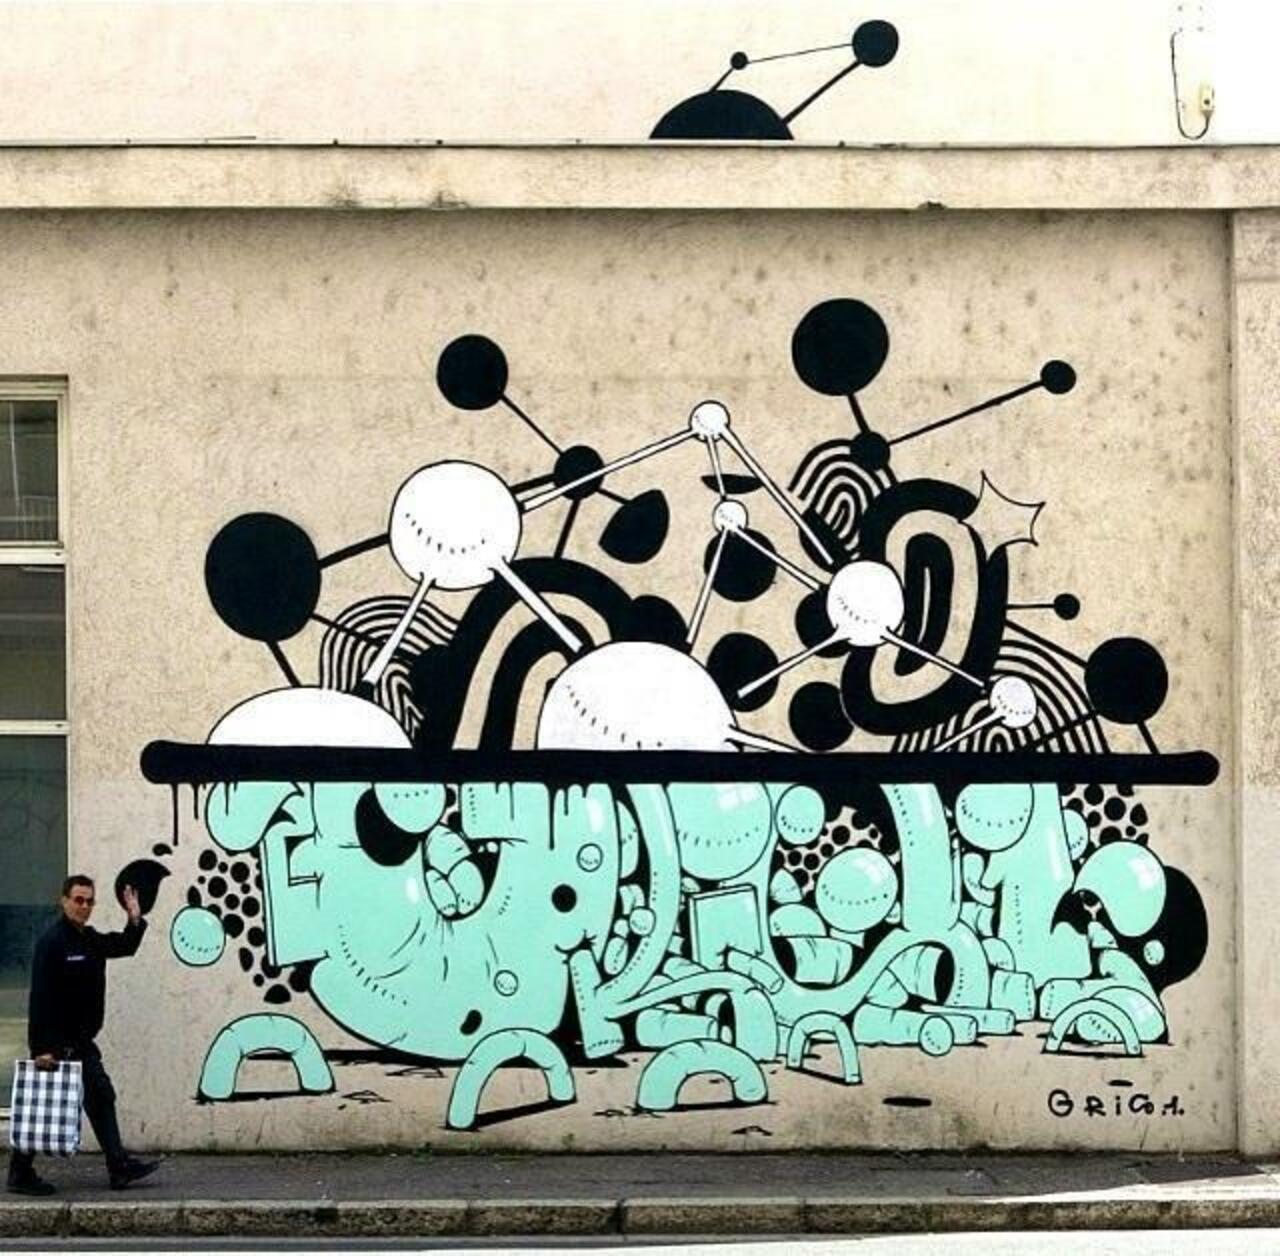 RT @StreetArtBuzz: GRIS1.. . #graffiti  https://twib.in/l/z86MAbodXkr #streetart #art #photo http://t.co/c6kqf1VJap